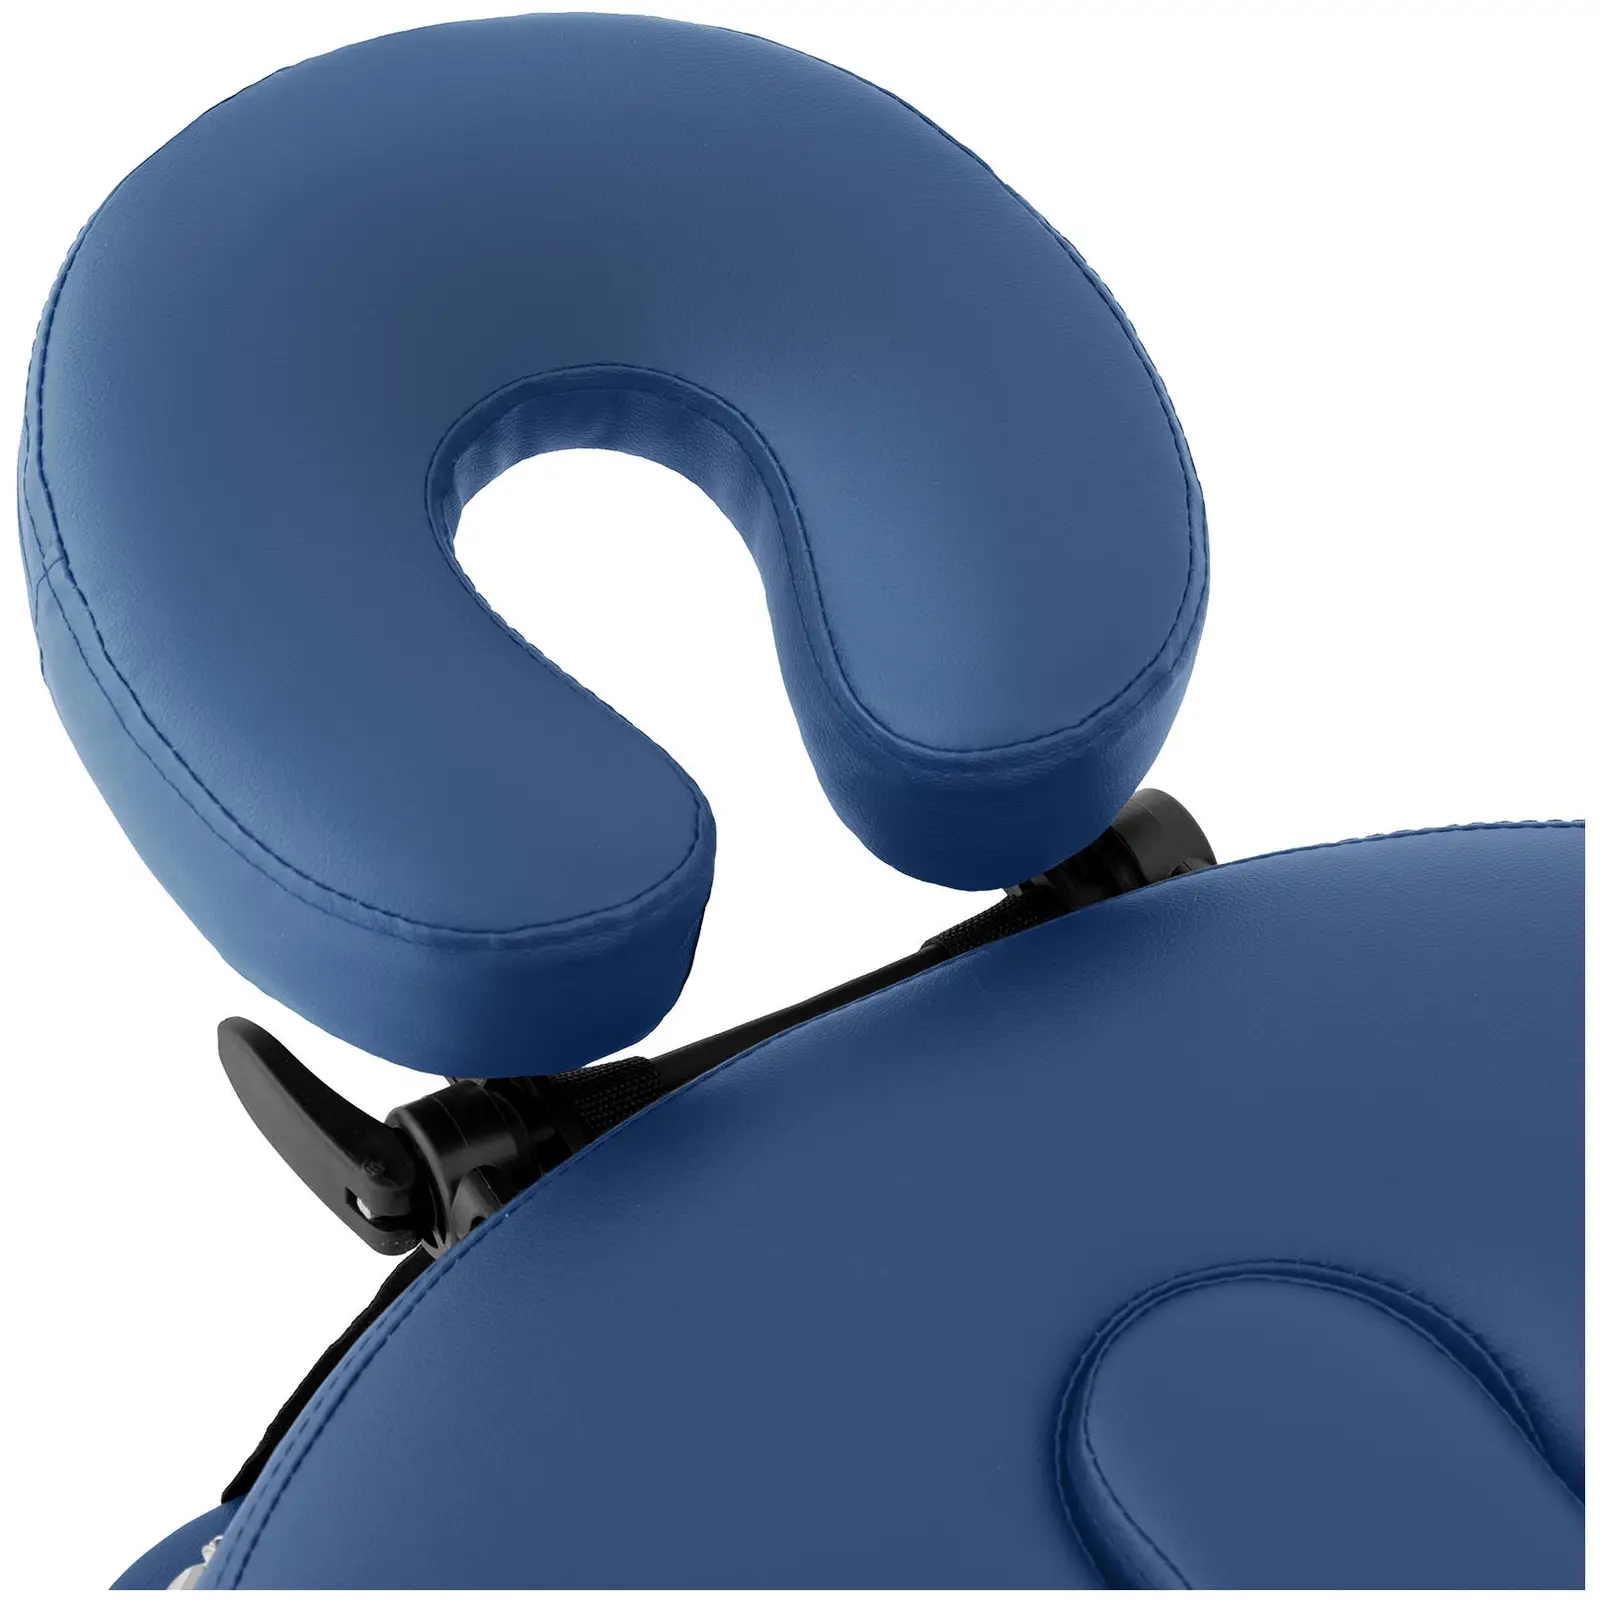 Hopfällbar massagebänk - 185-211 x 70-88 x 63-85 cm - 227 kg - Blå